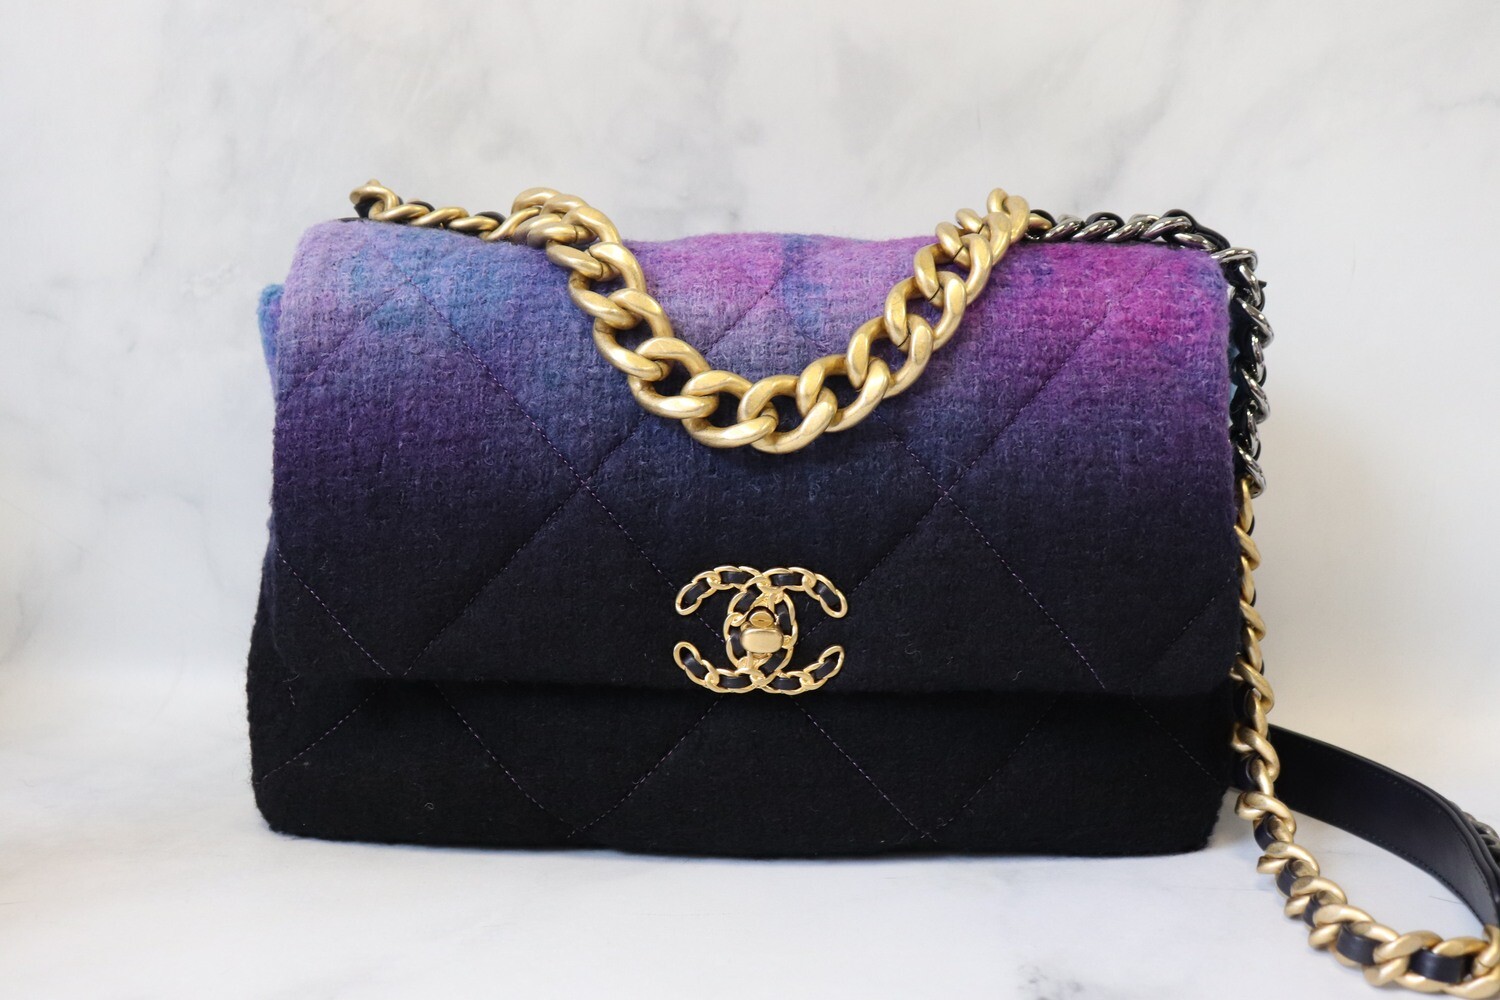 Chanel 19 Tweed Large, Purple, New in Box - Julia Rose Boston